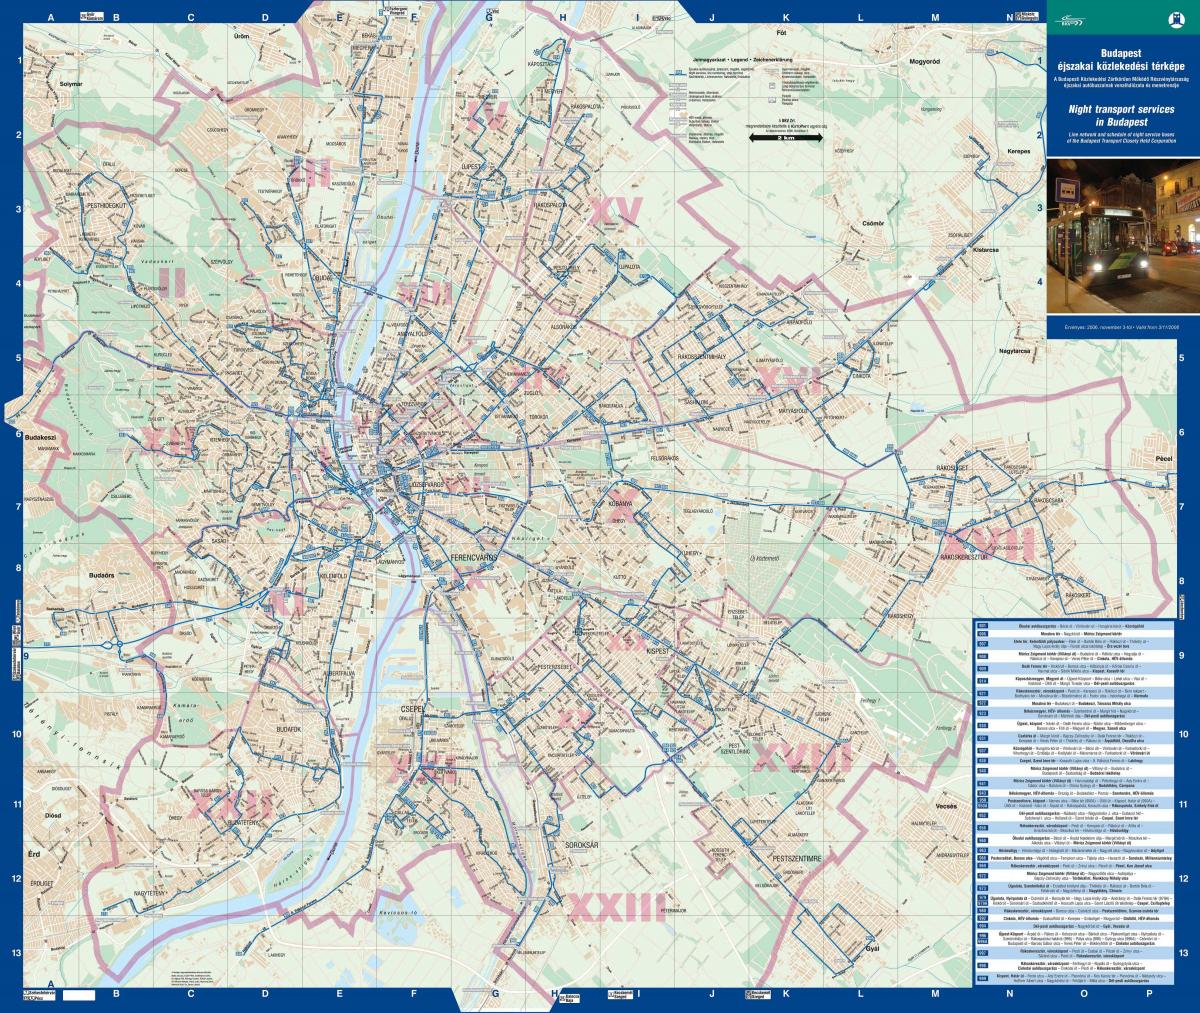 будапешт шөнө автобусны газрын зураг